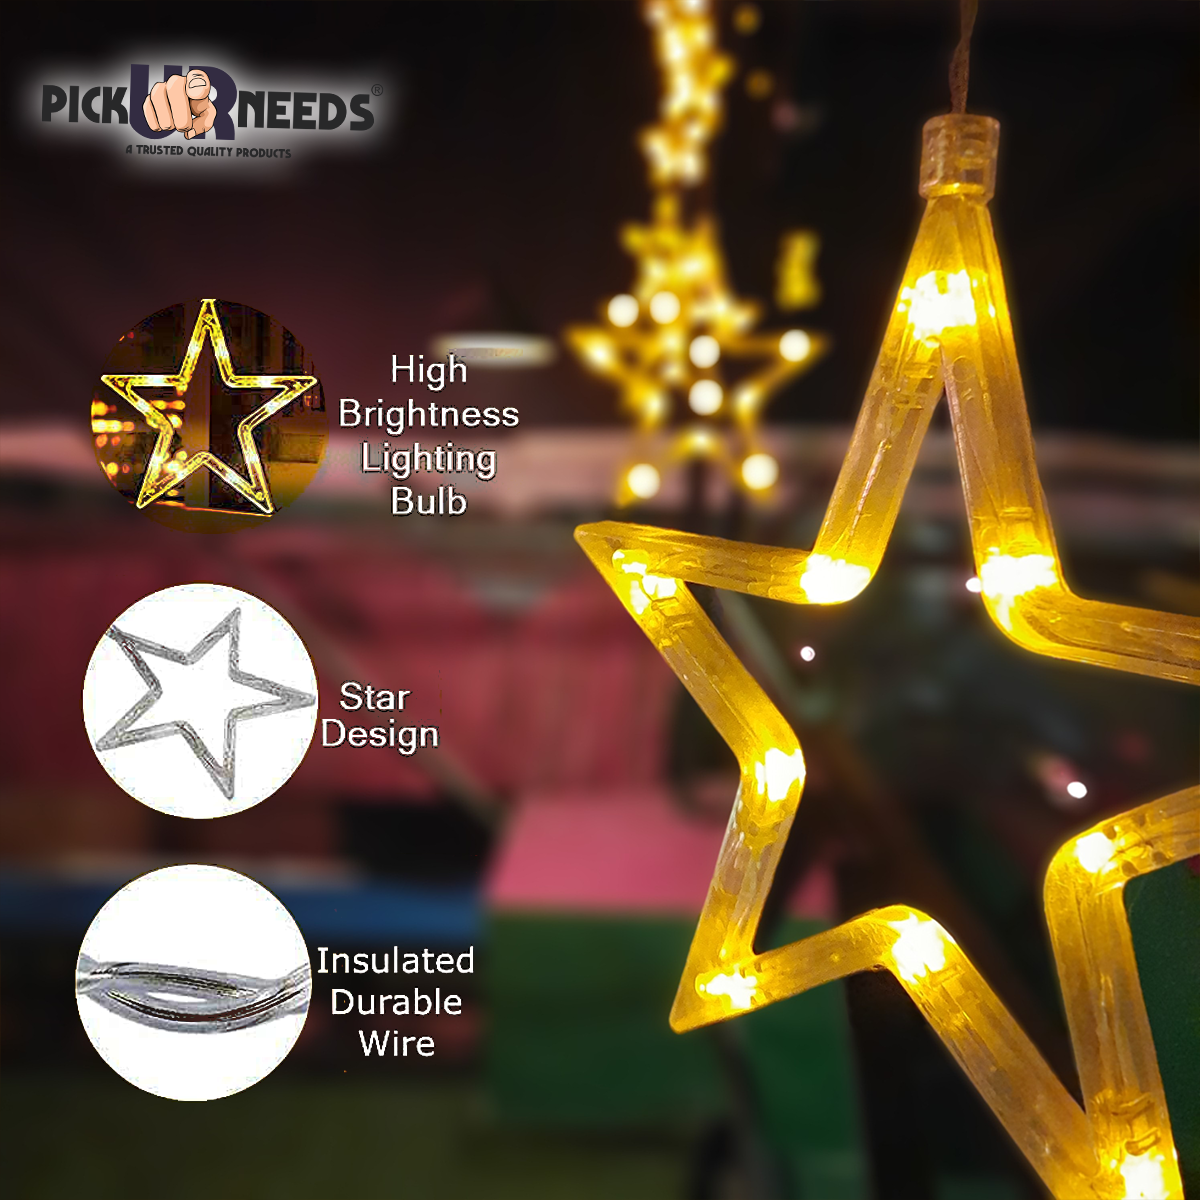 Pick Ur Needs 138 LEDs Multicolor Star Light Flickering Smart Lighting For Home Decor